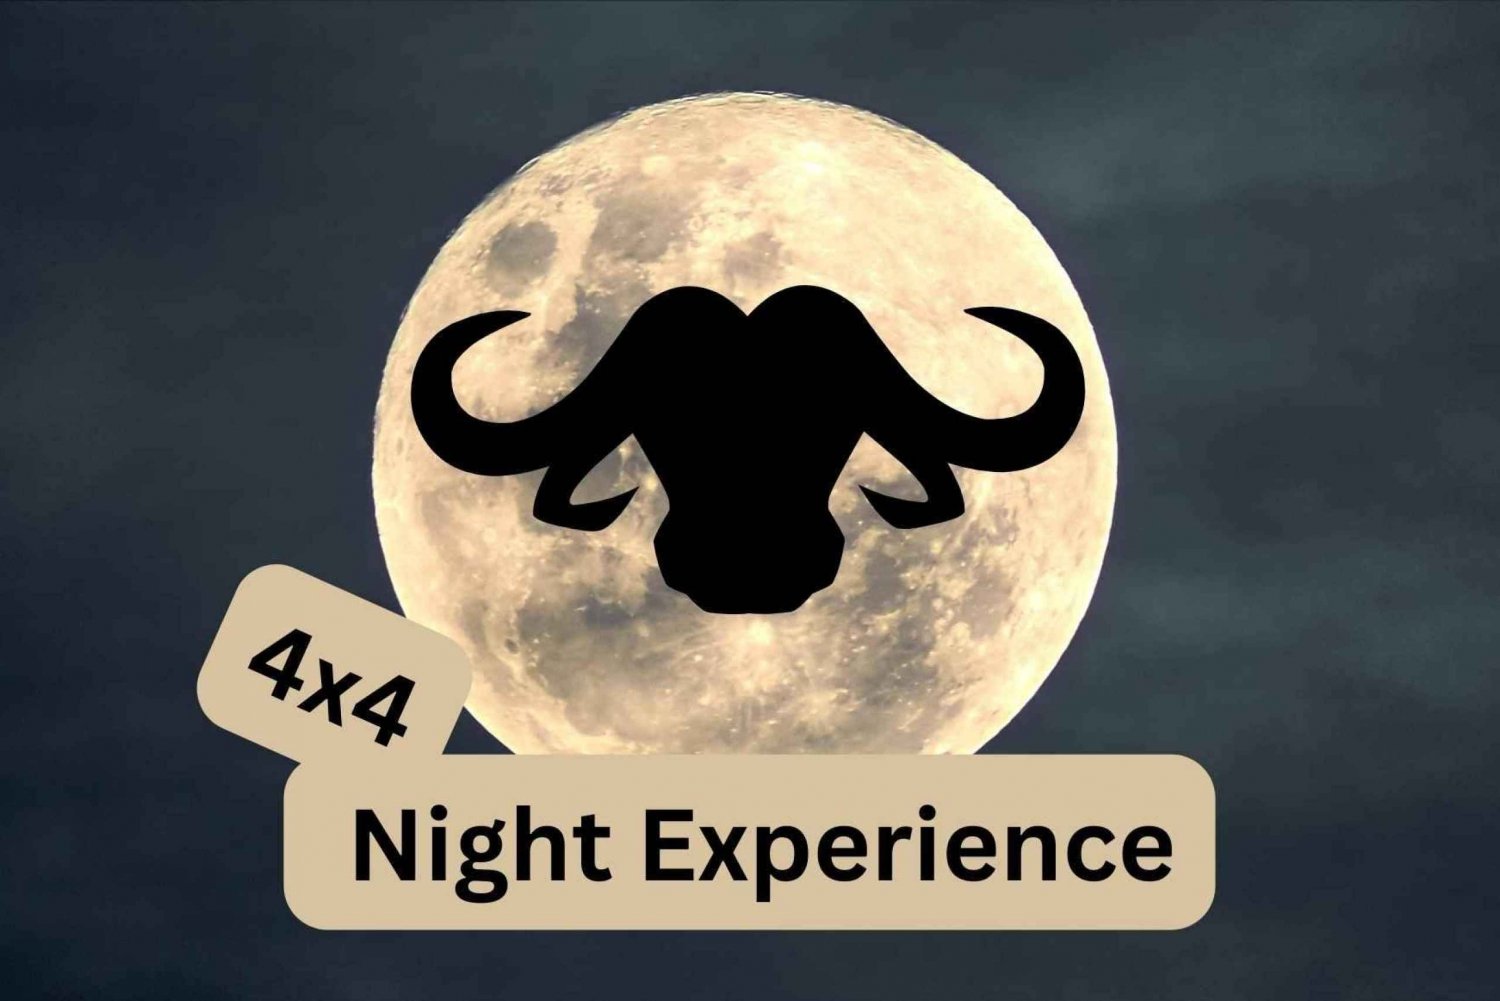 Victoria Falls : 4x4 Night Experience